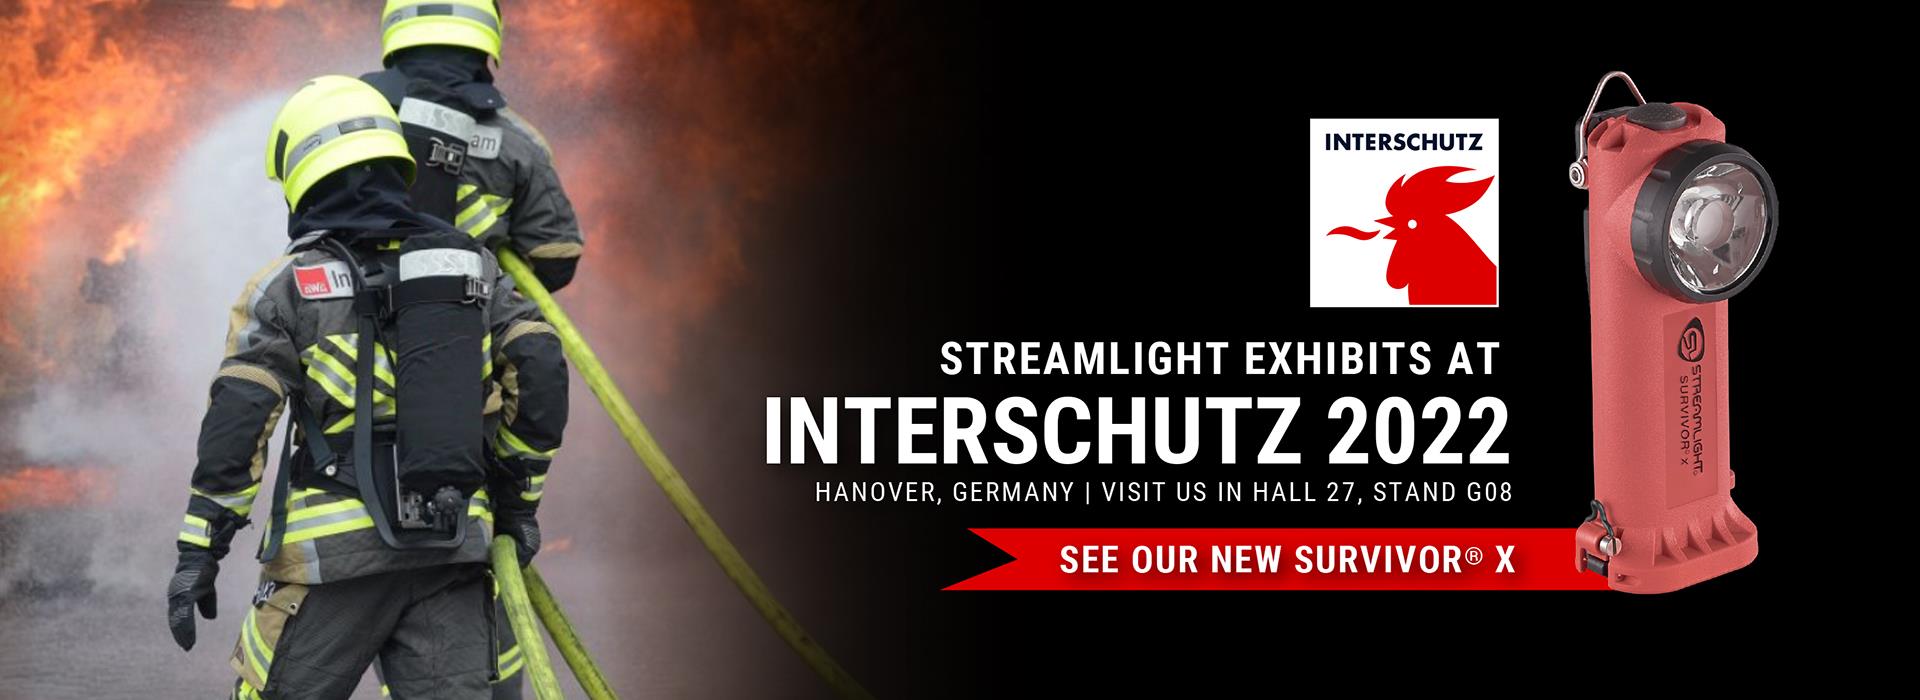 Streamlight Exhibits at Interschutz 2022